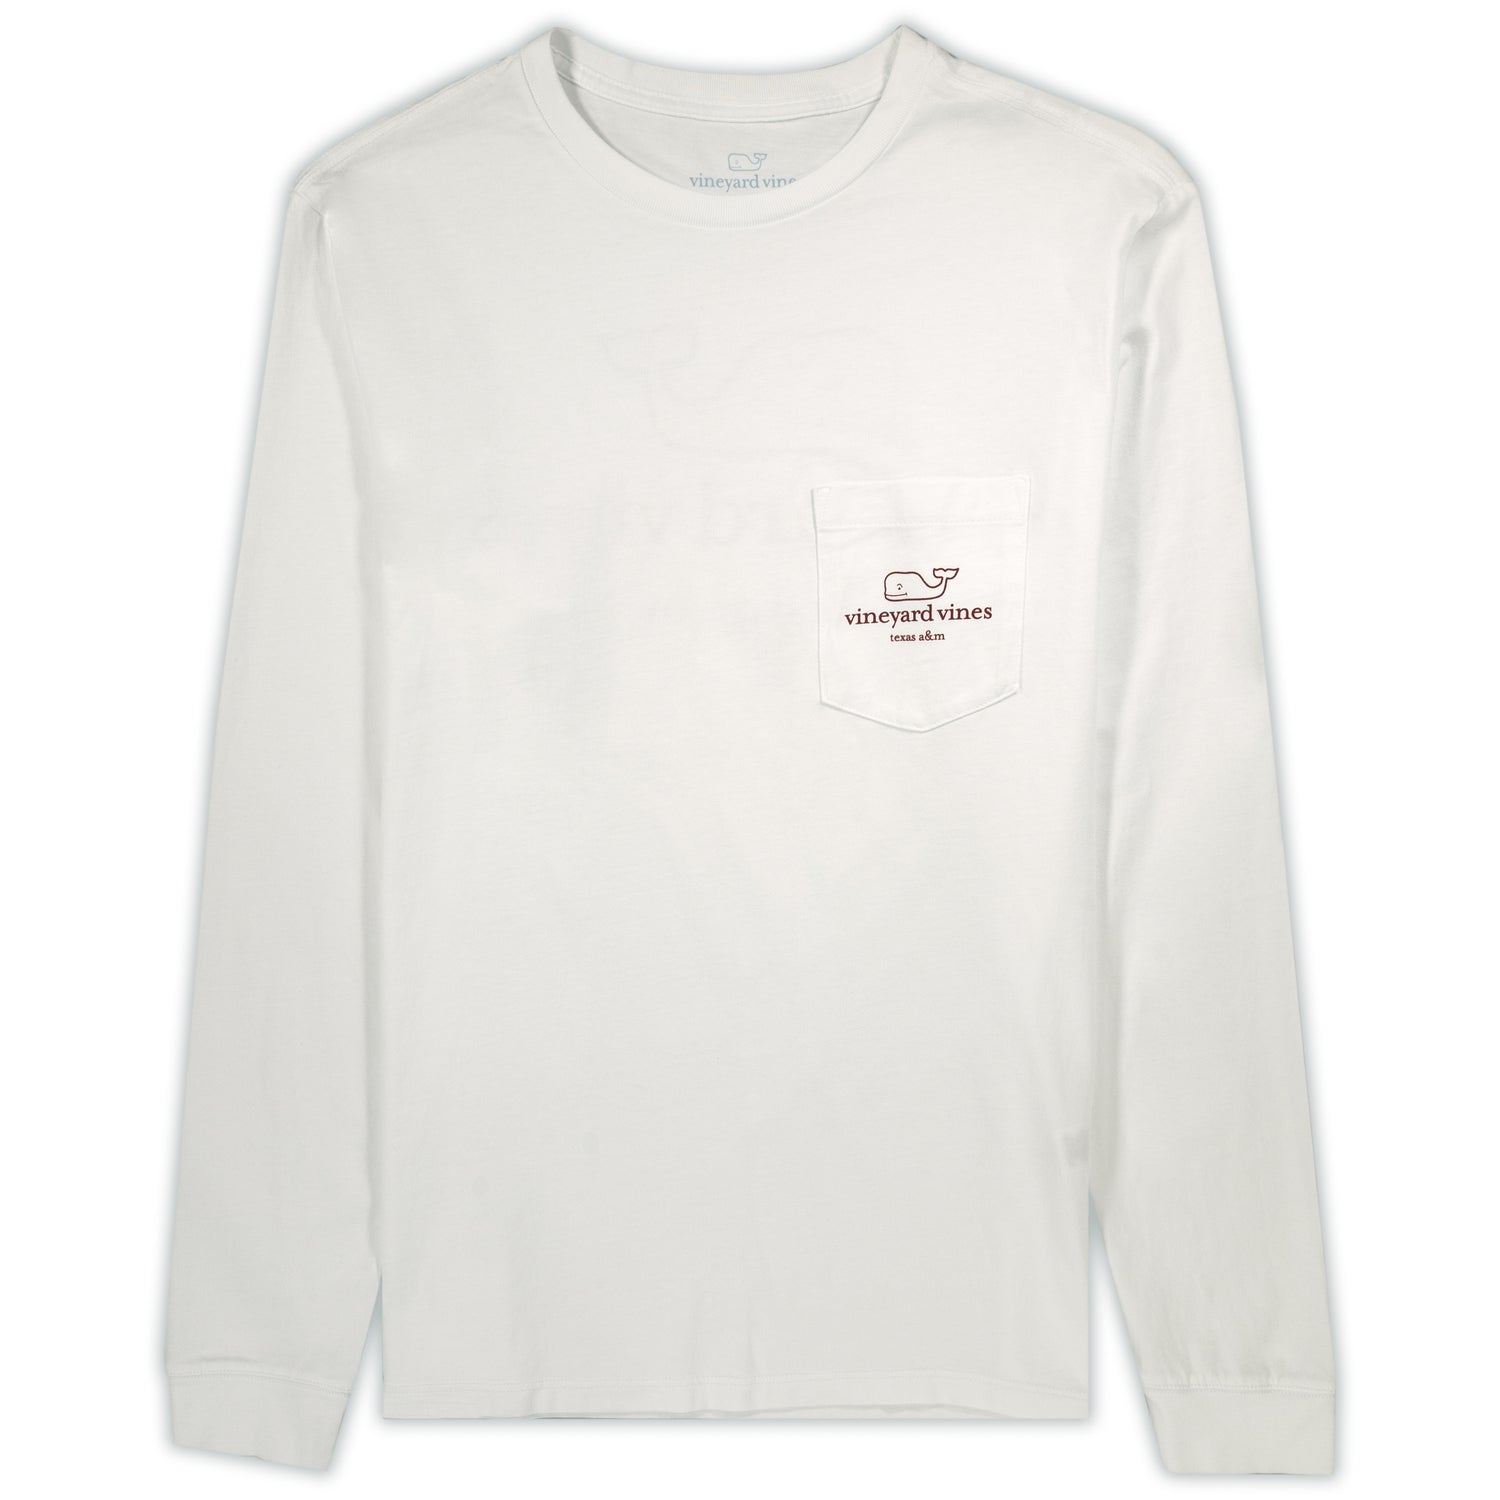 Boston Red Sox Vineyard Vines Logo Hoodie Long Sleeve T-Shirt - White